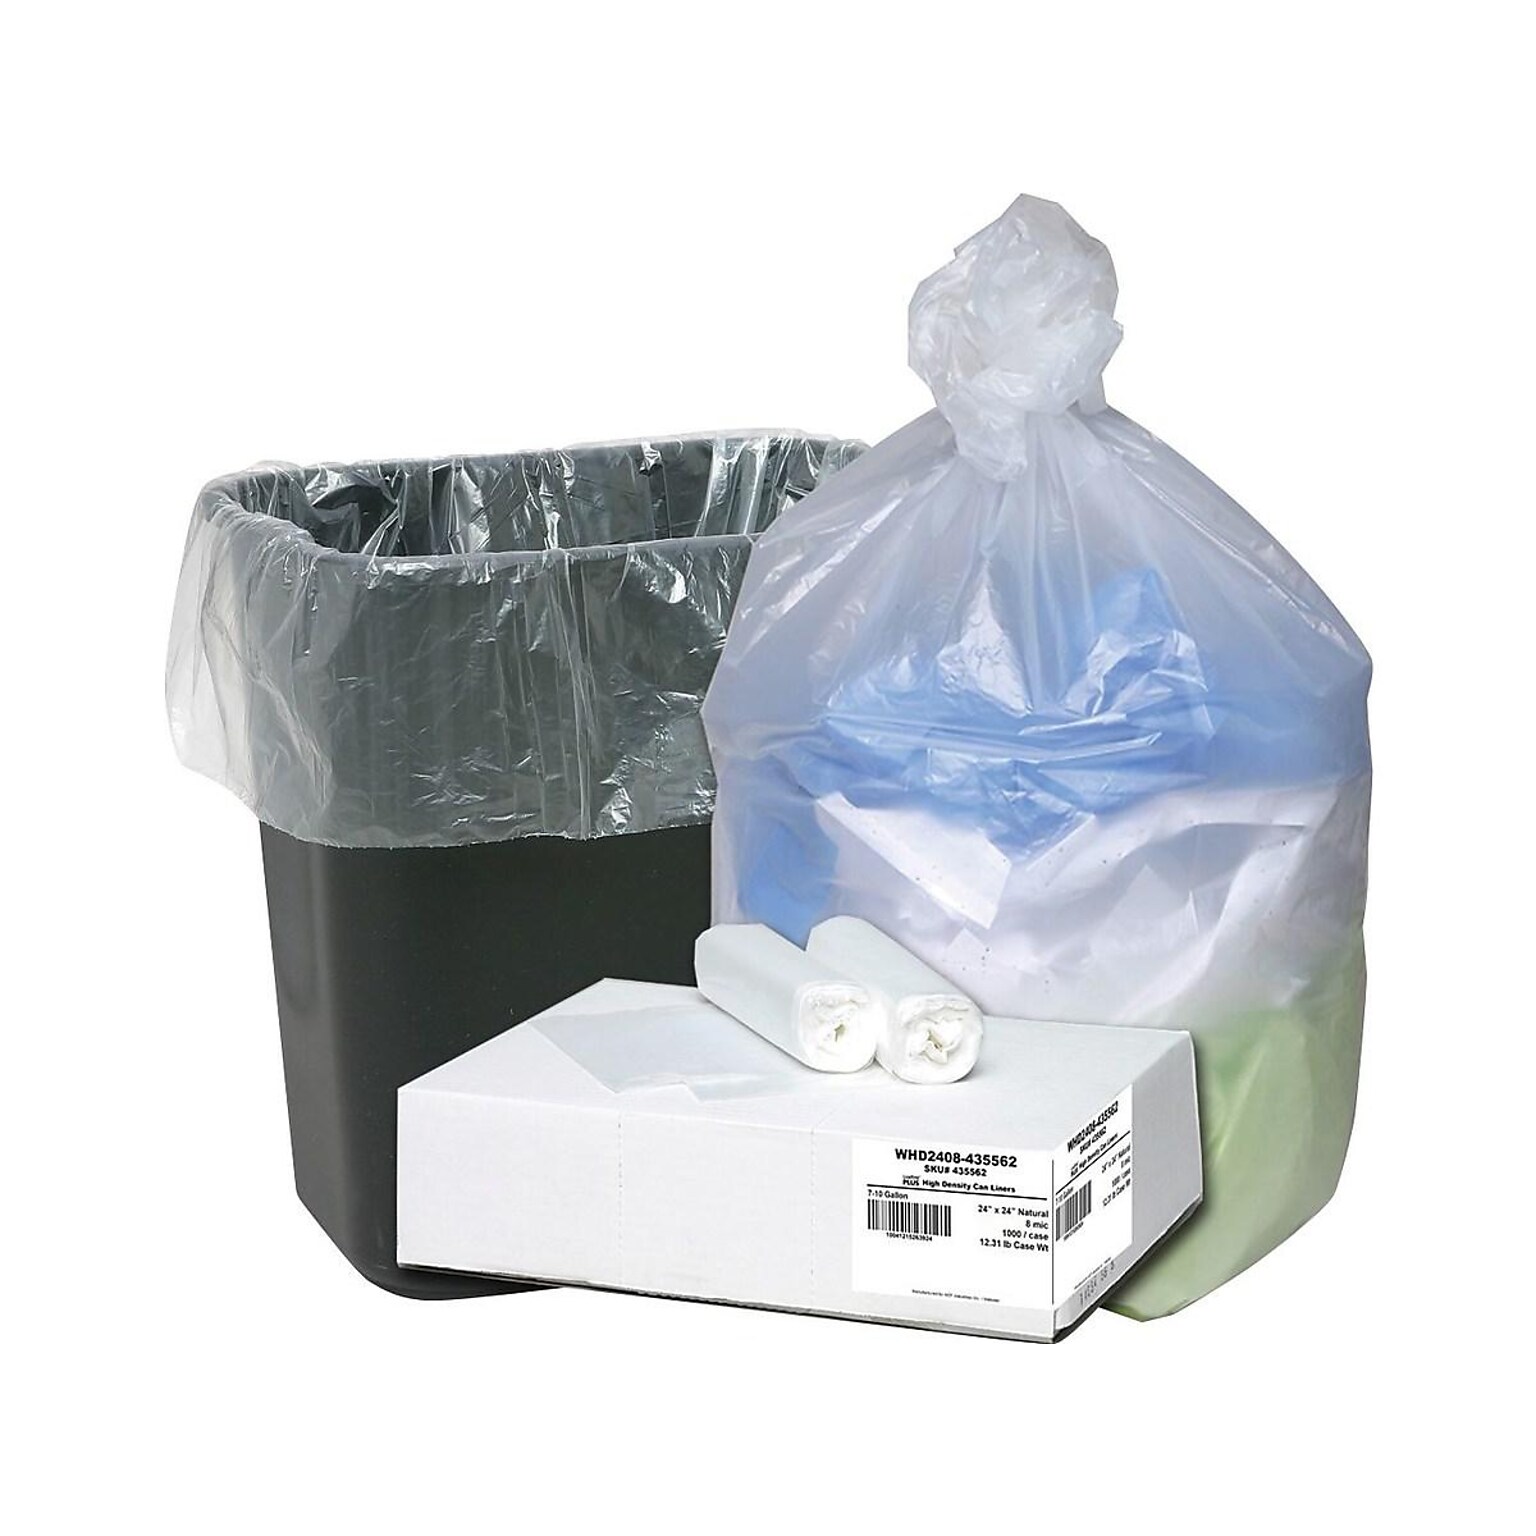 Berry Global Ultra Plus 10 Gallon Industrial Trash Bag, 24 x 24, High Density, 8 mic, Natural, 1000 Bags/Box (WHD 2408)